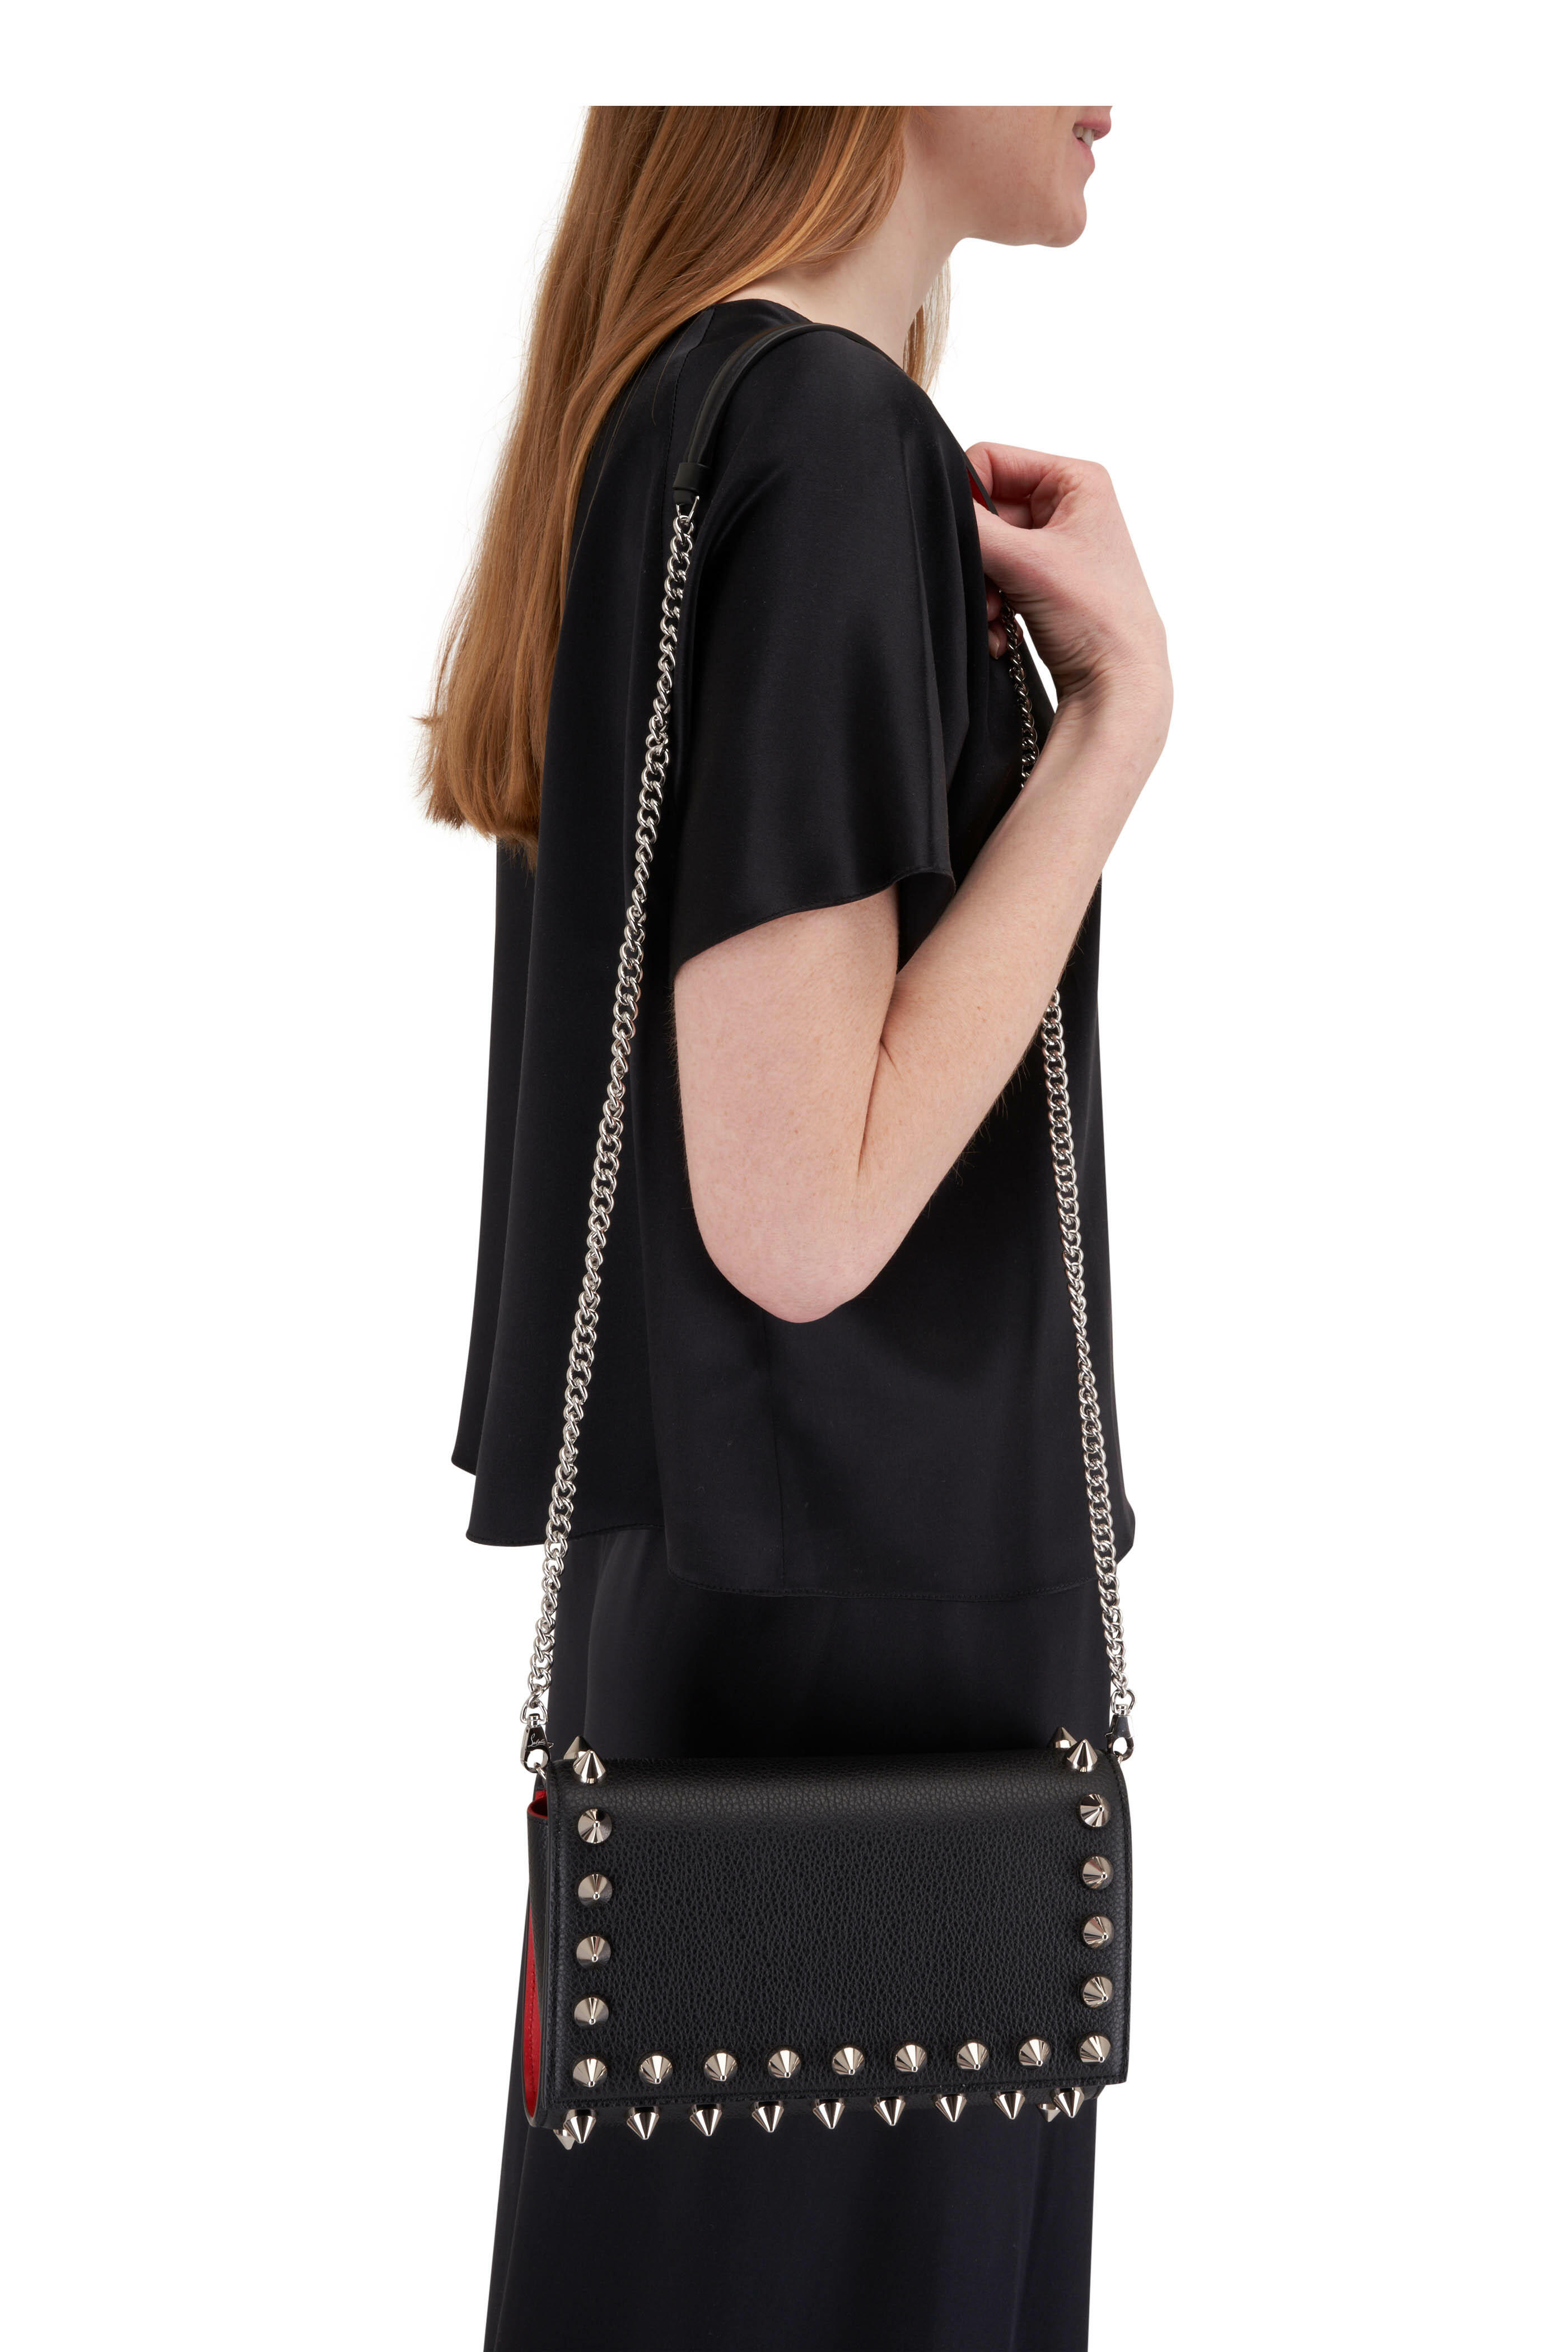 Christian Louboutin Paloma Studded Leather Chain Clutch Bag